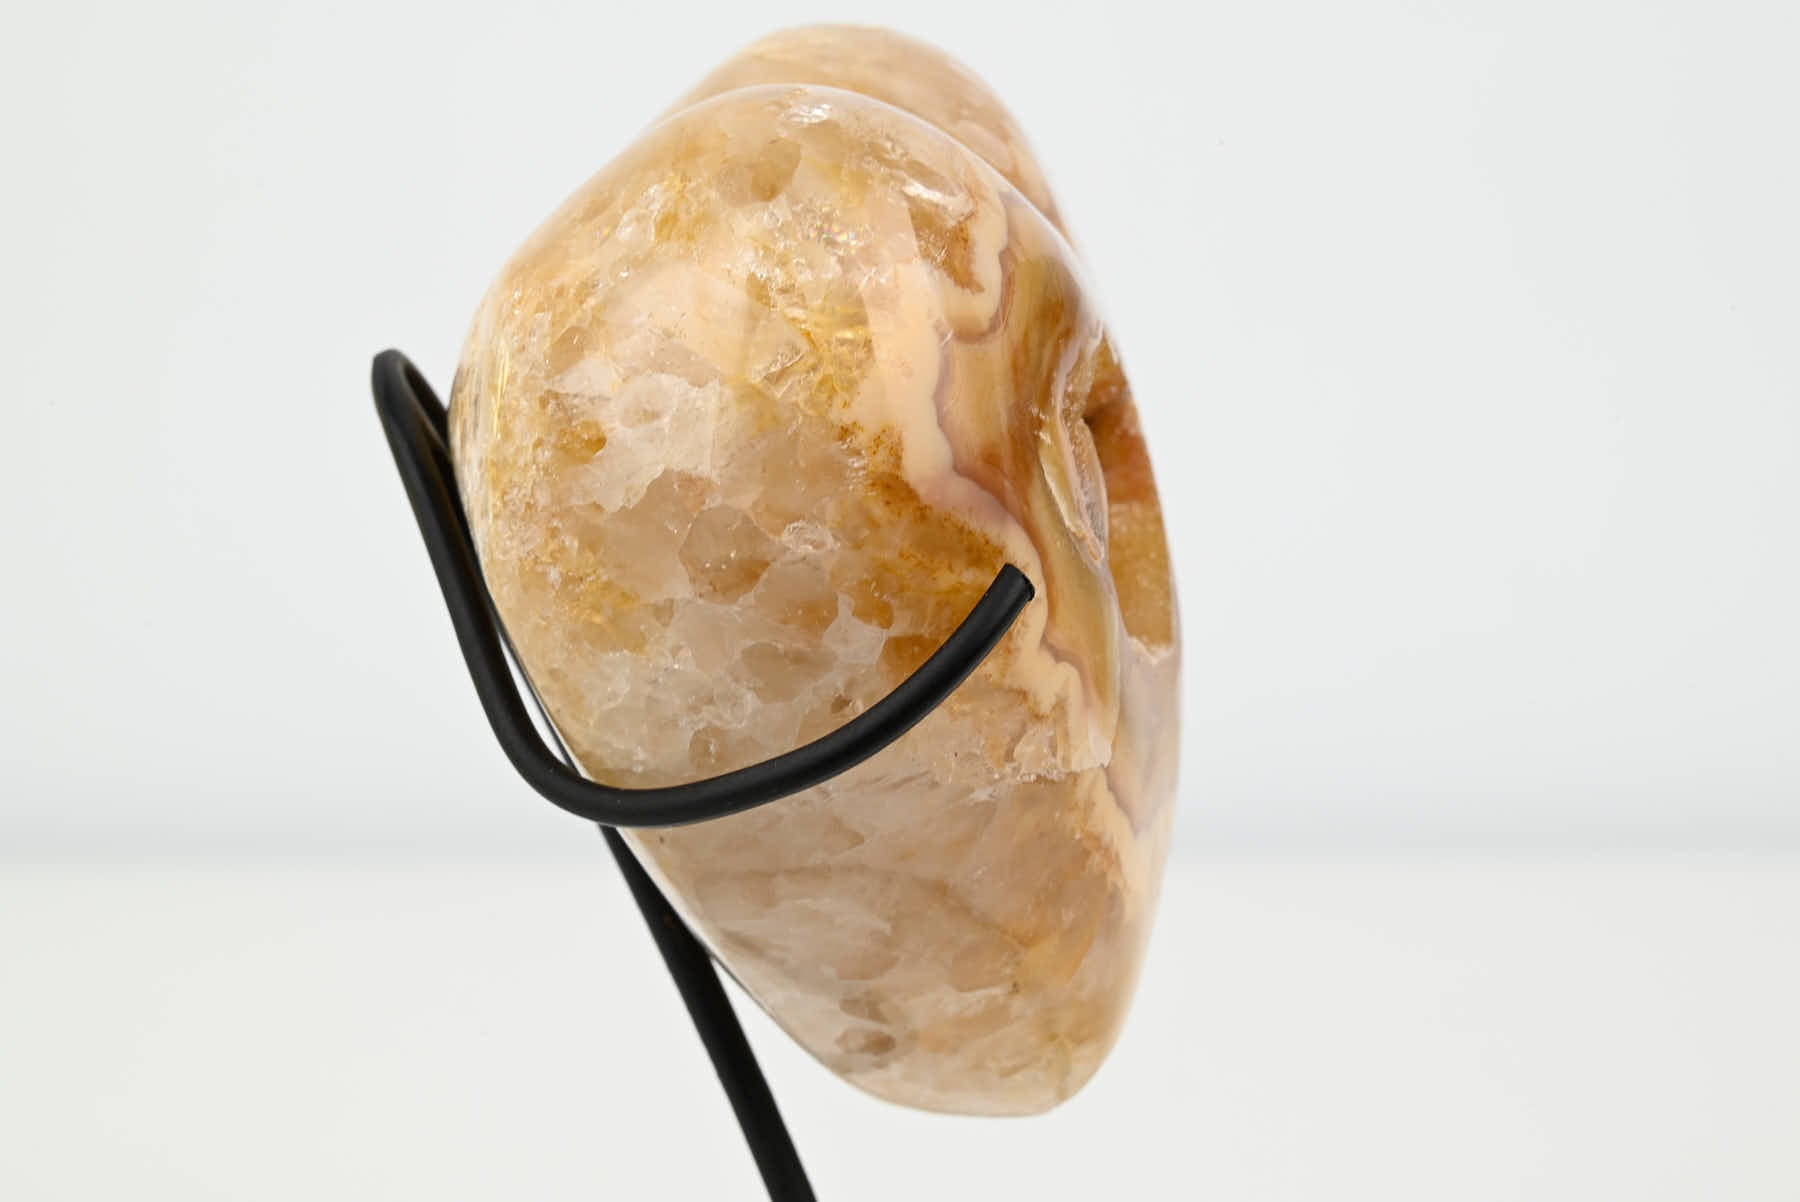 Extra Quality Agate Crystal Heart - 0.48kg, 11cm high - #HTAGAT-34021